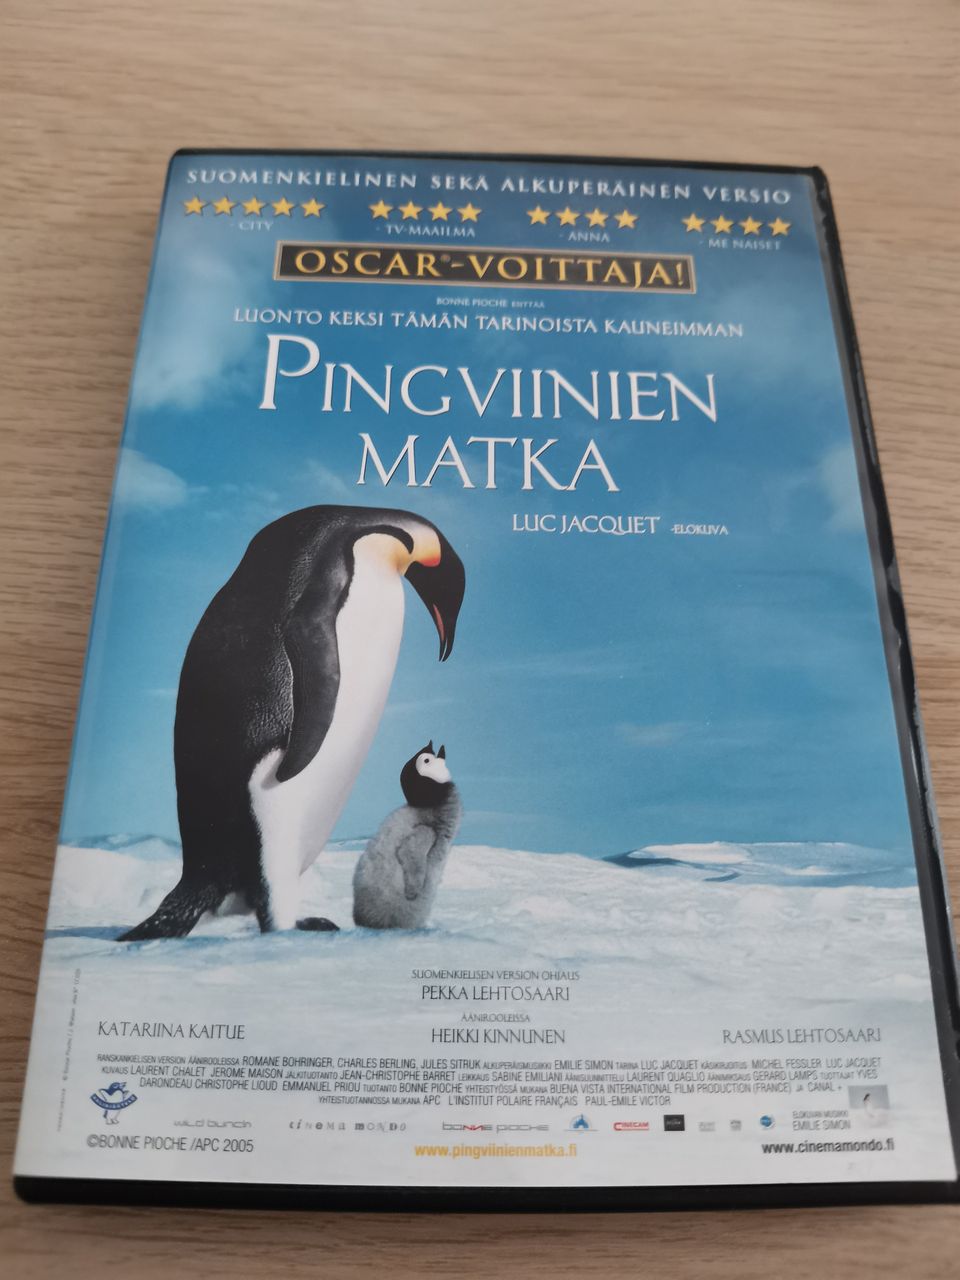 Dvd leffa Pingviinien matka